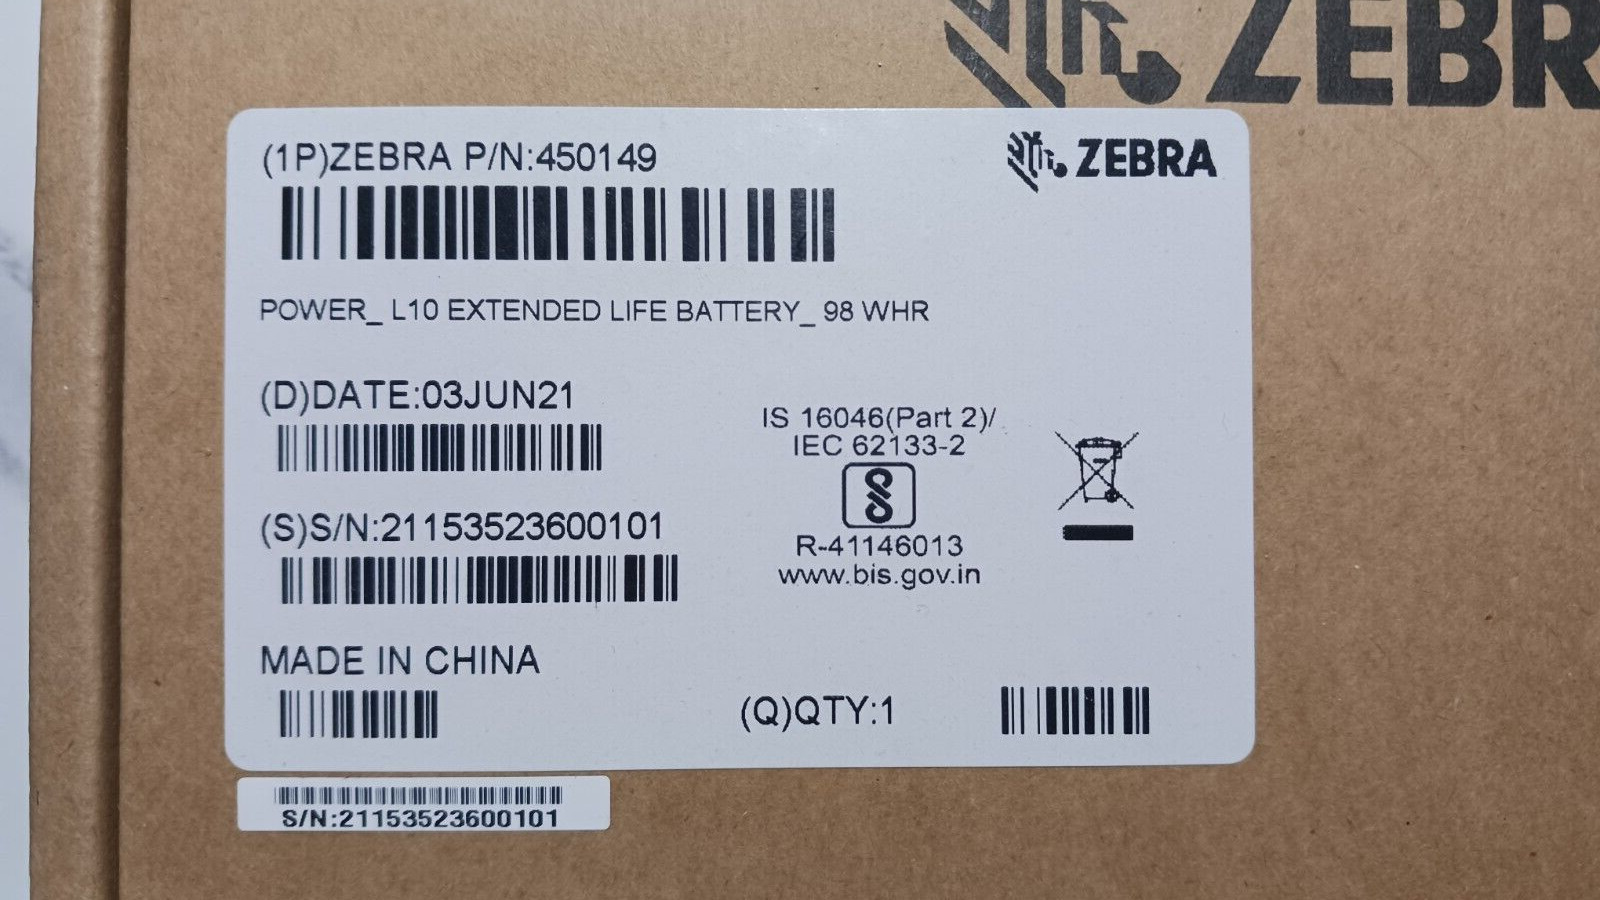 450149 zebra xplore L10 extened batery